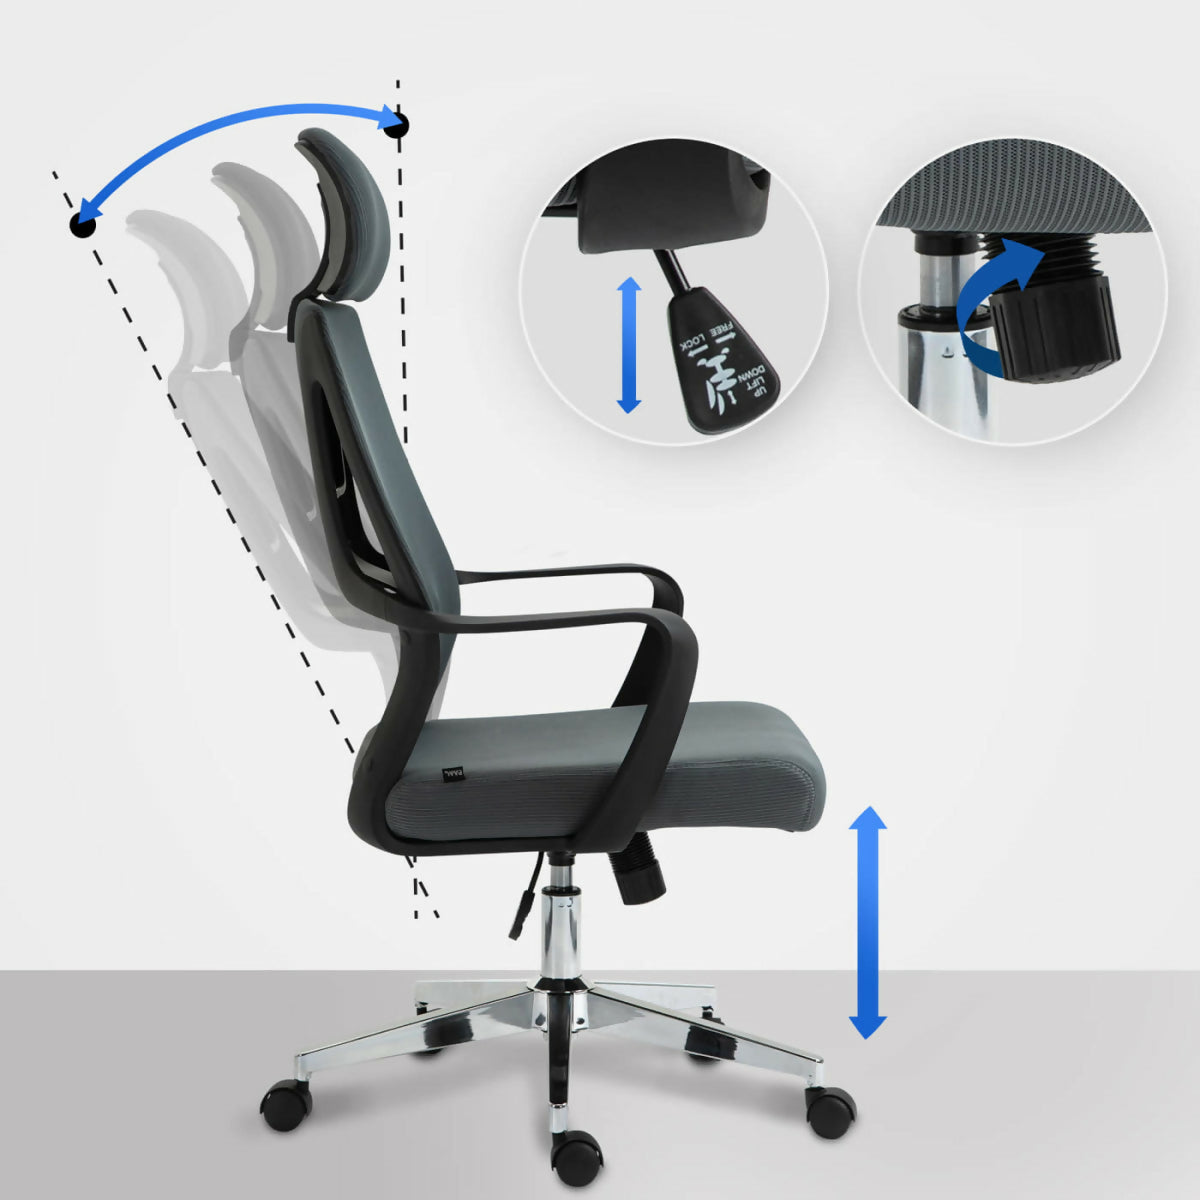 Kanab office chair - Gray fabric